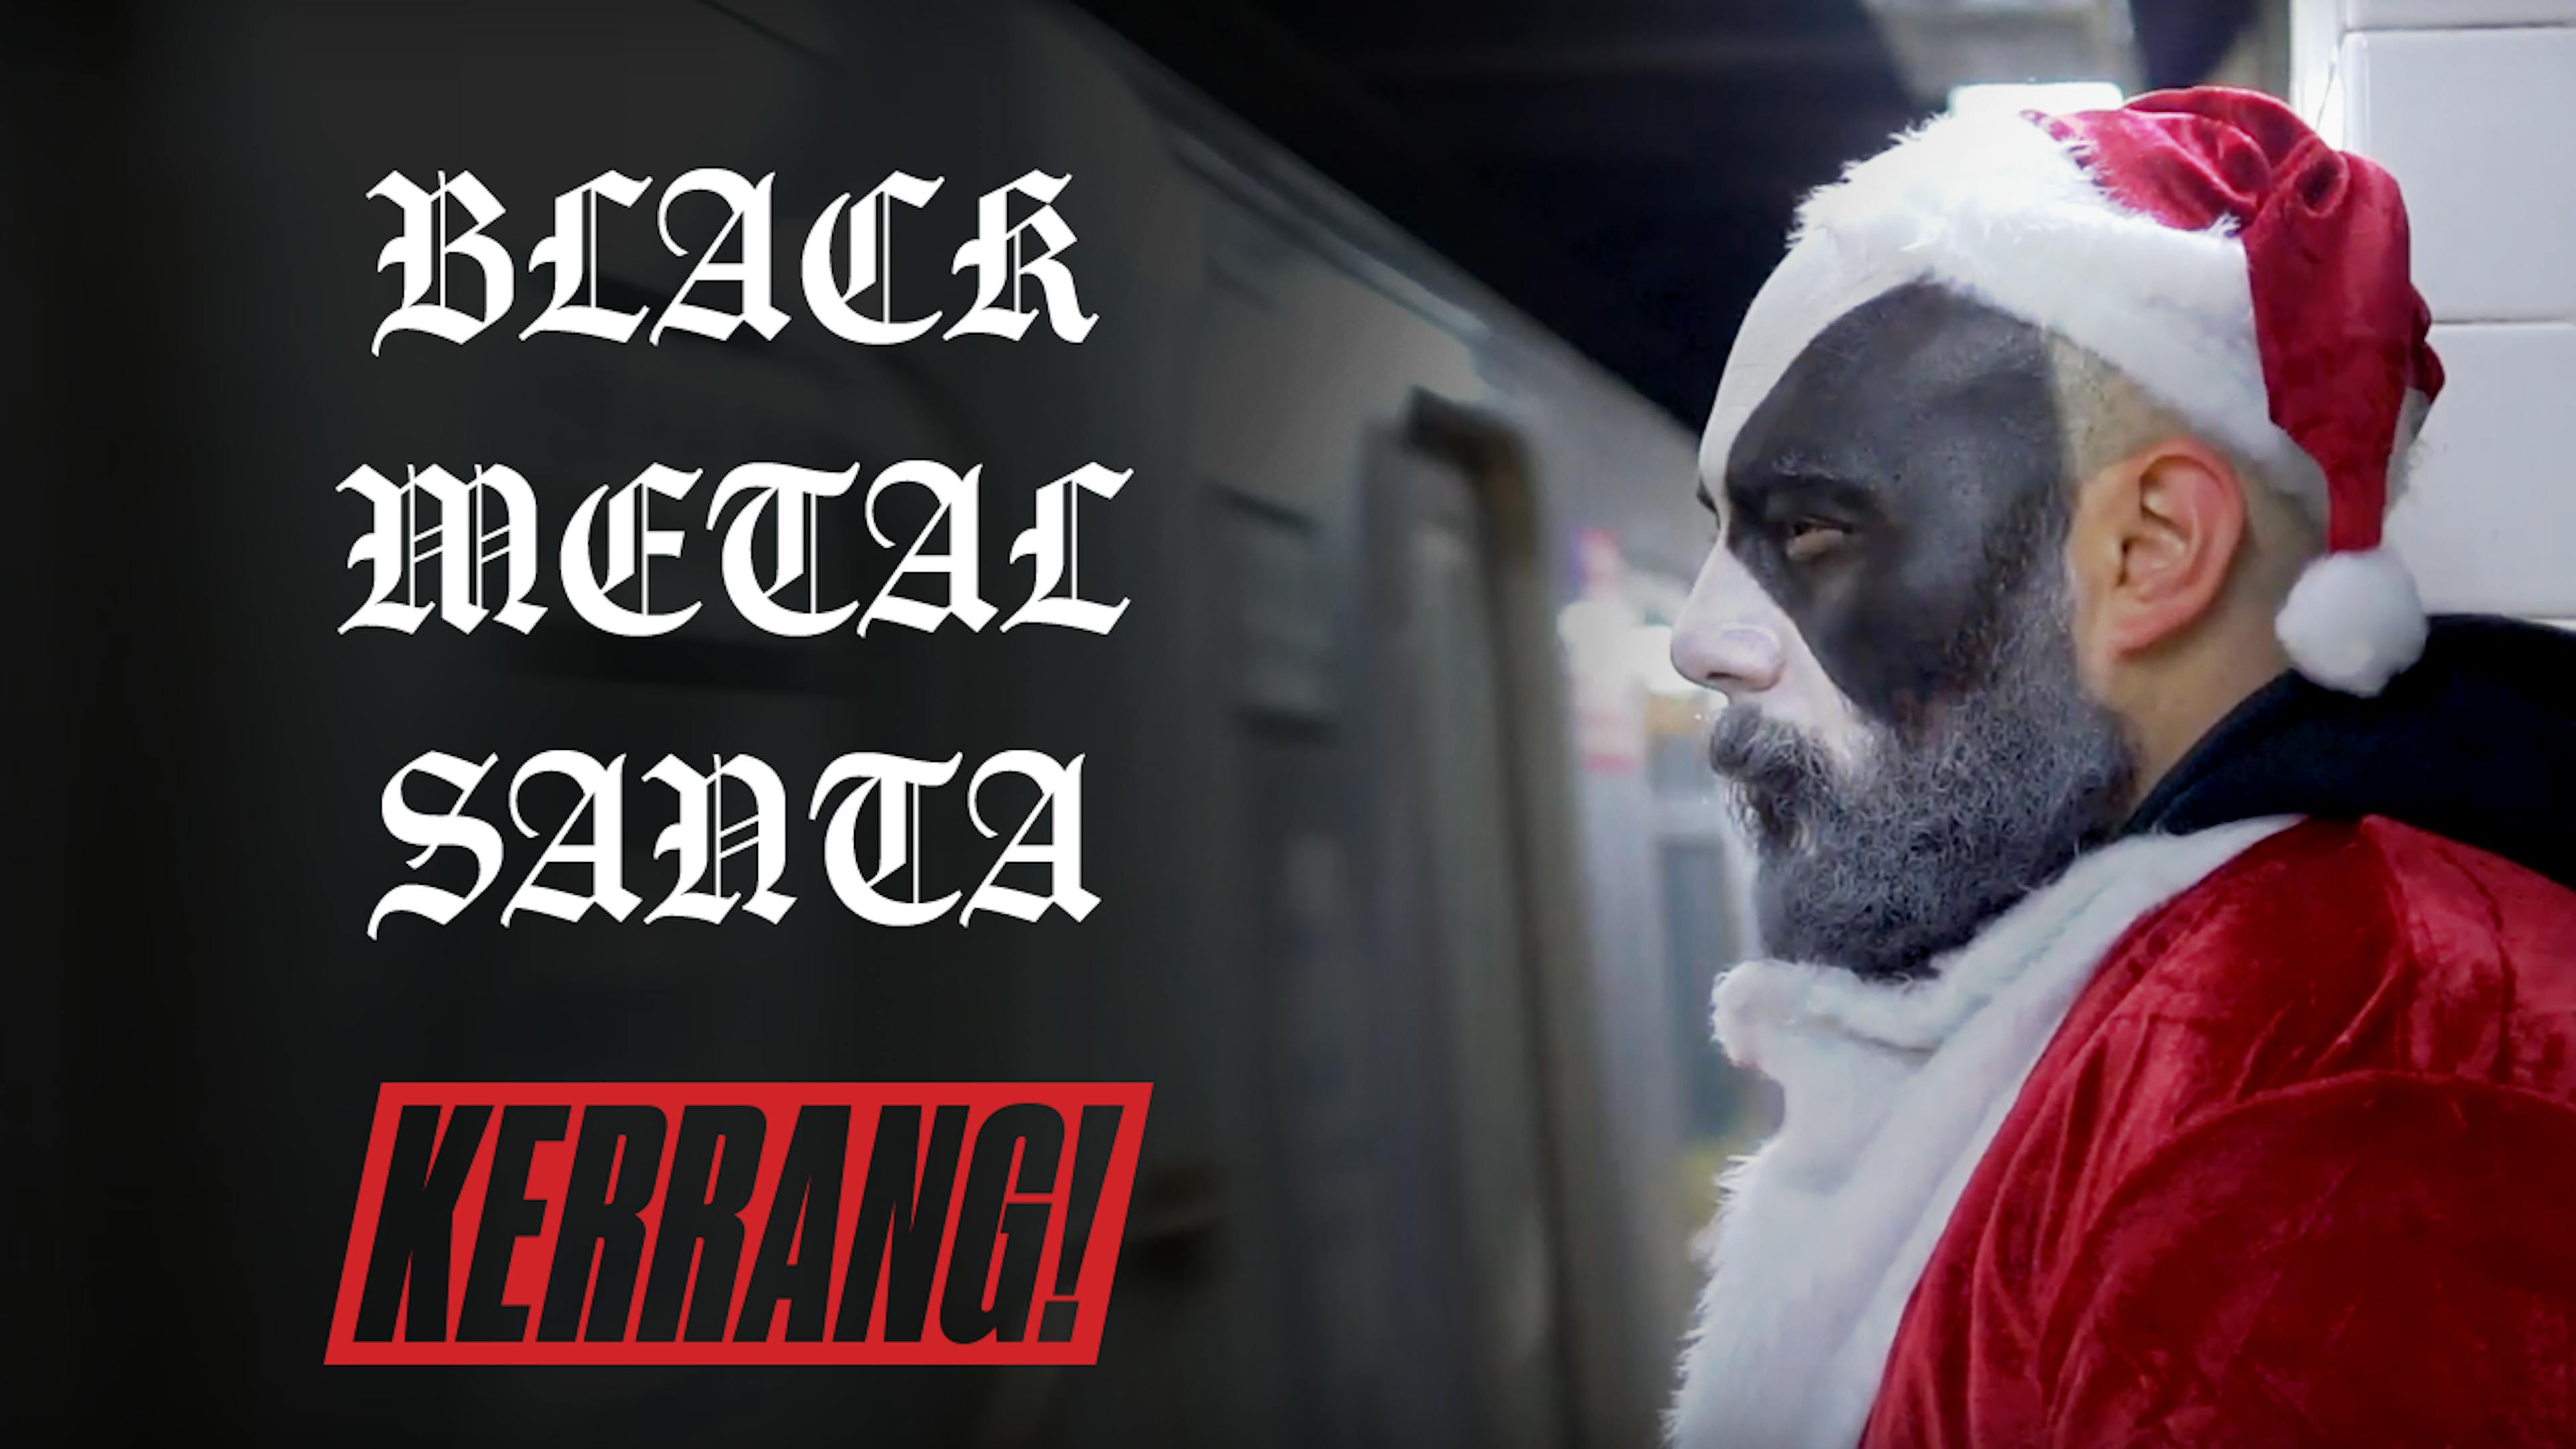 Happy Holidays From Black Metal Santa